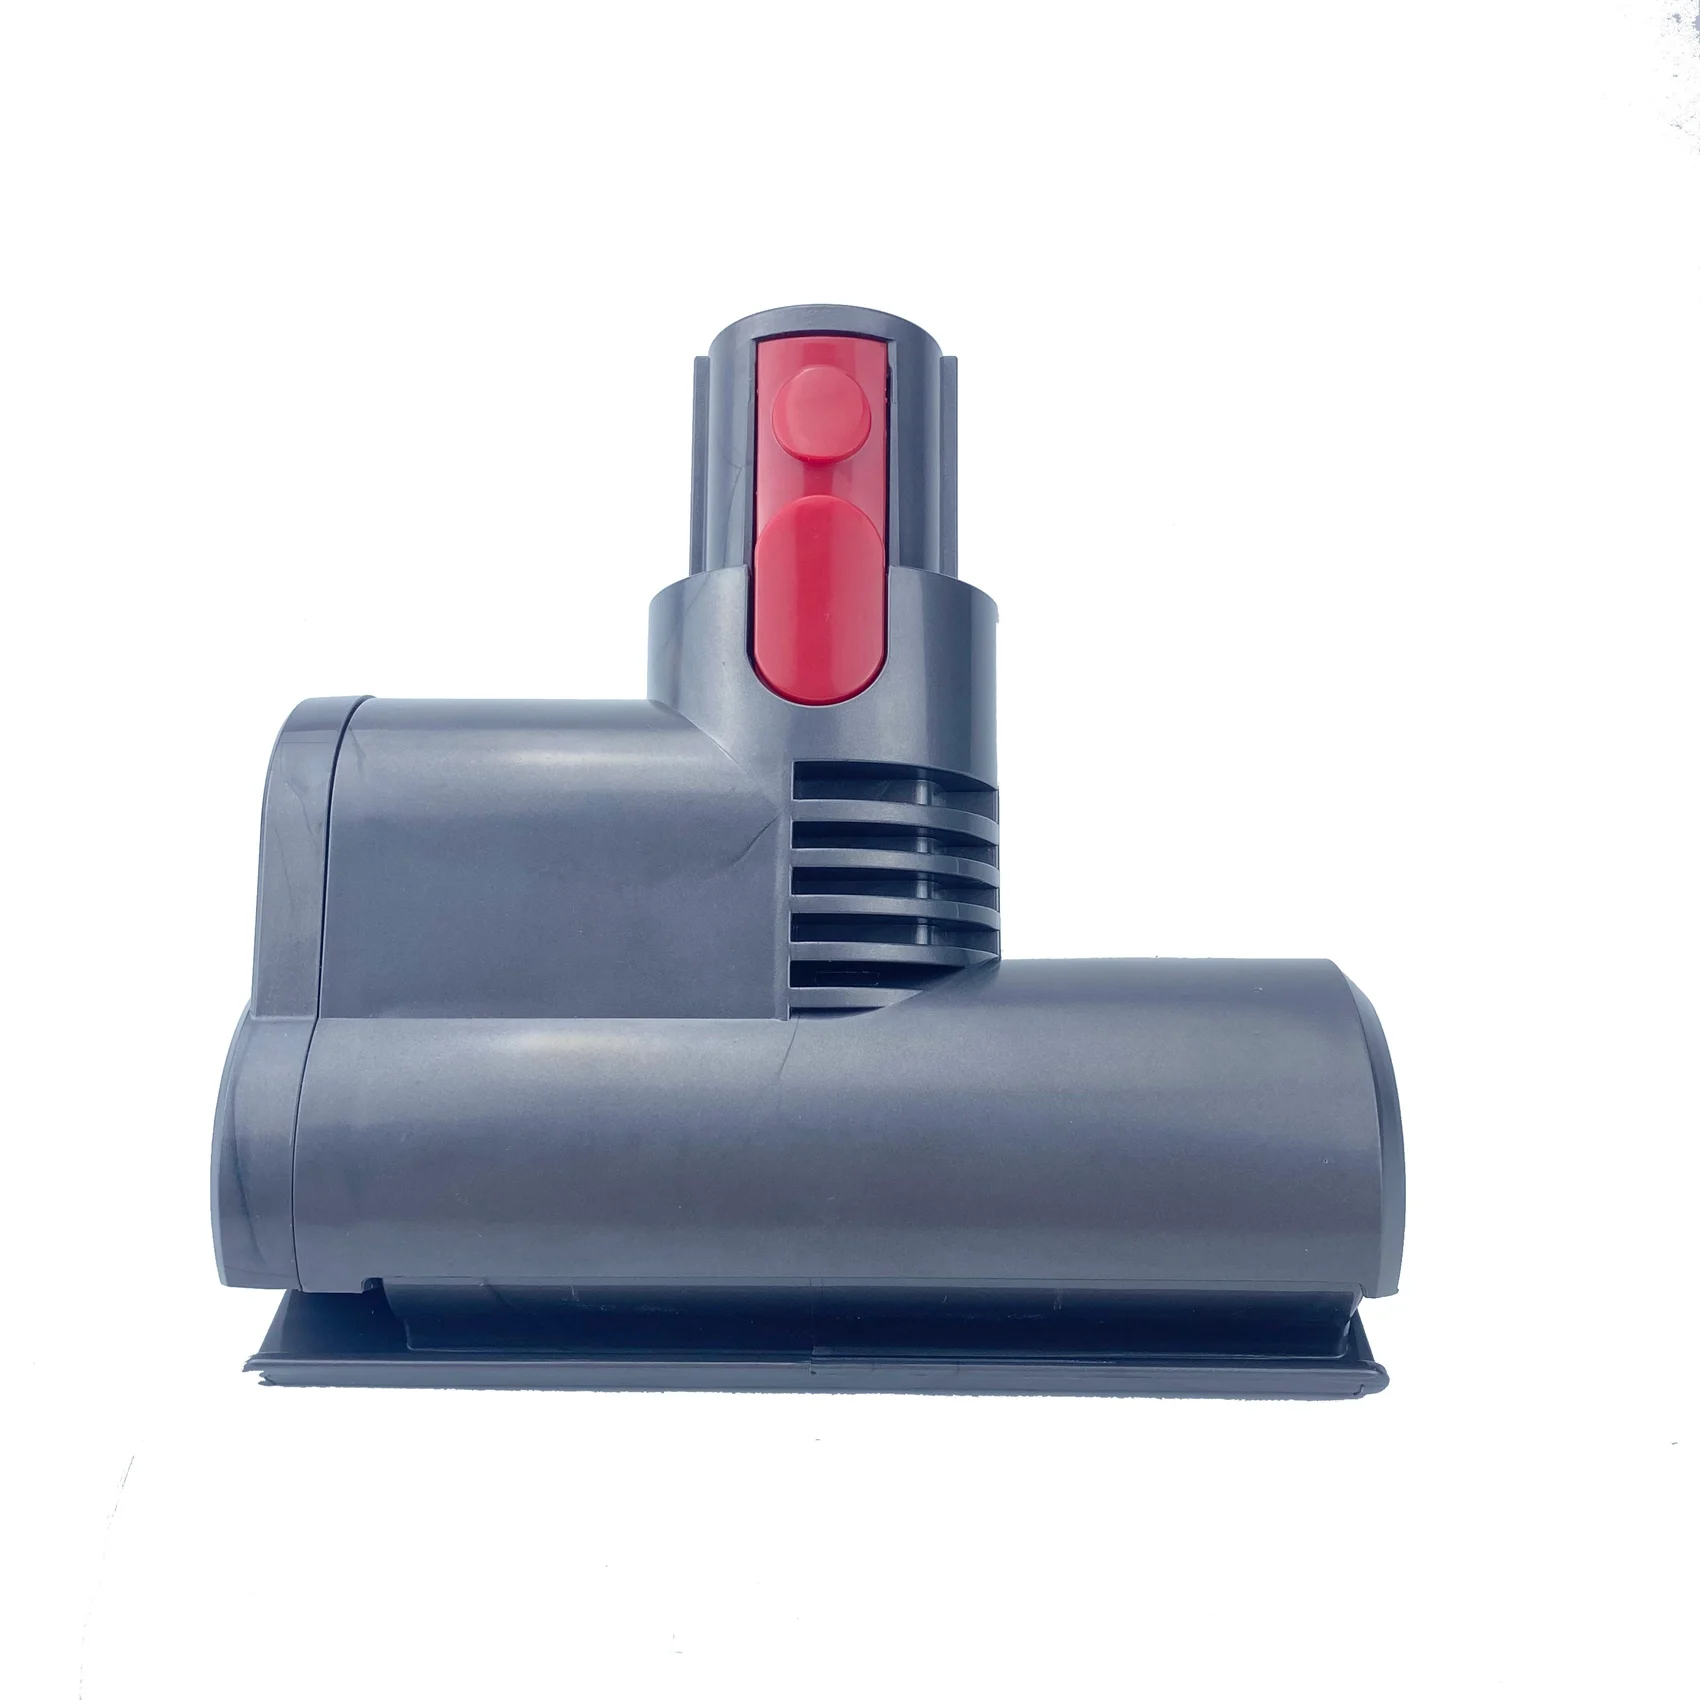 

Mite Removal Suction Head Turbo Roller Brush for Dyson V7 V8 V10 V11 Vacuum Cleaner Parts for Dry Cleaning